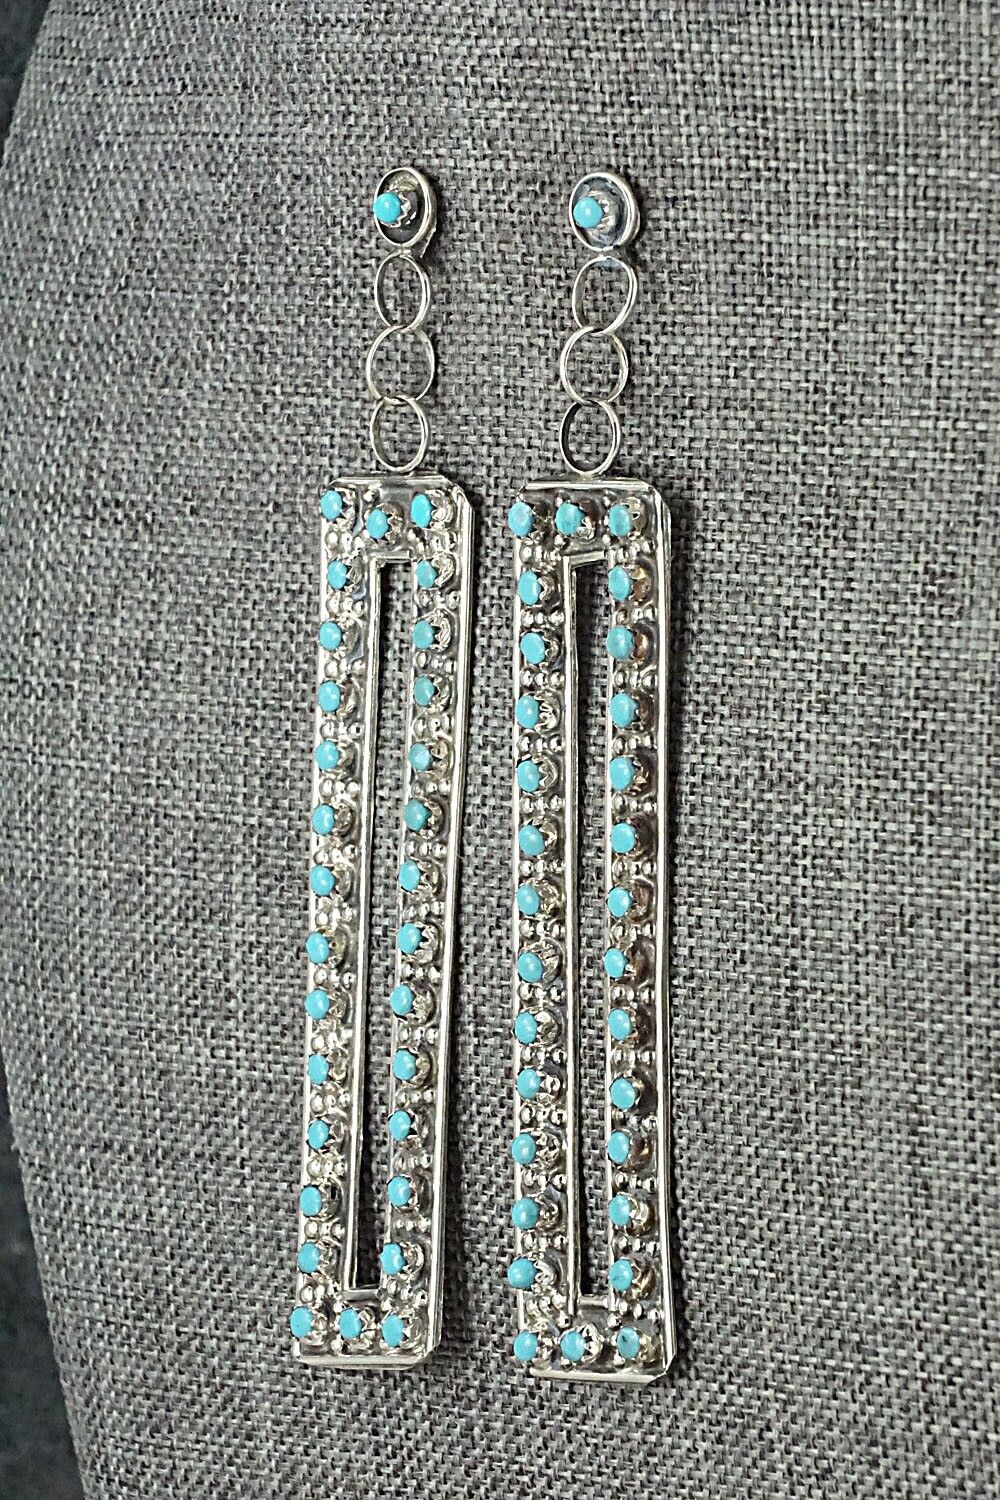 Turquoise & Sterling Silver Earrings - Joanne Cheama